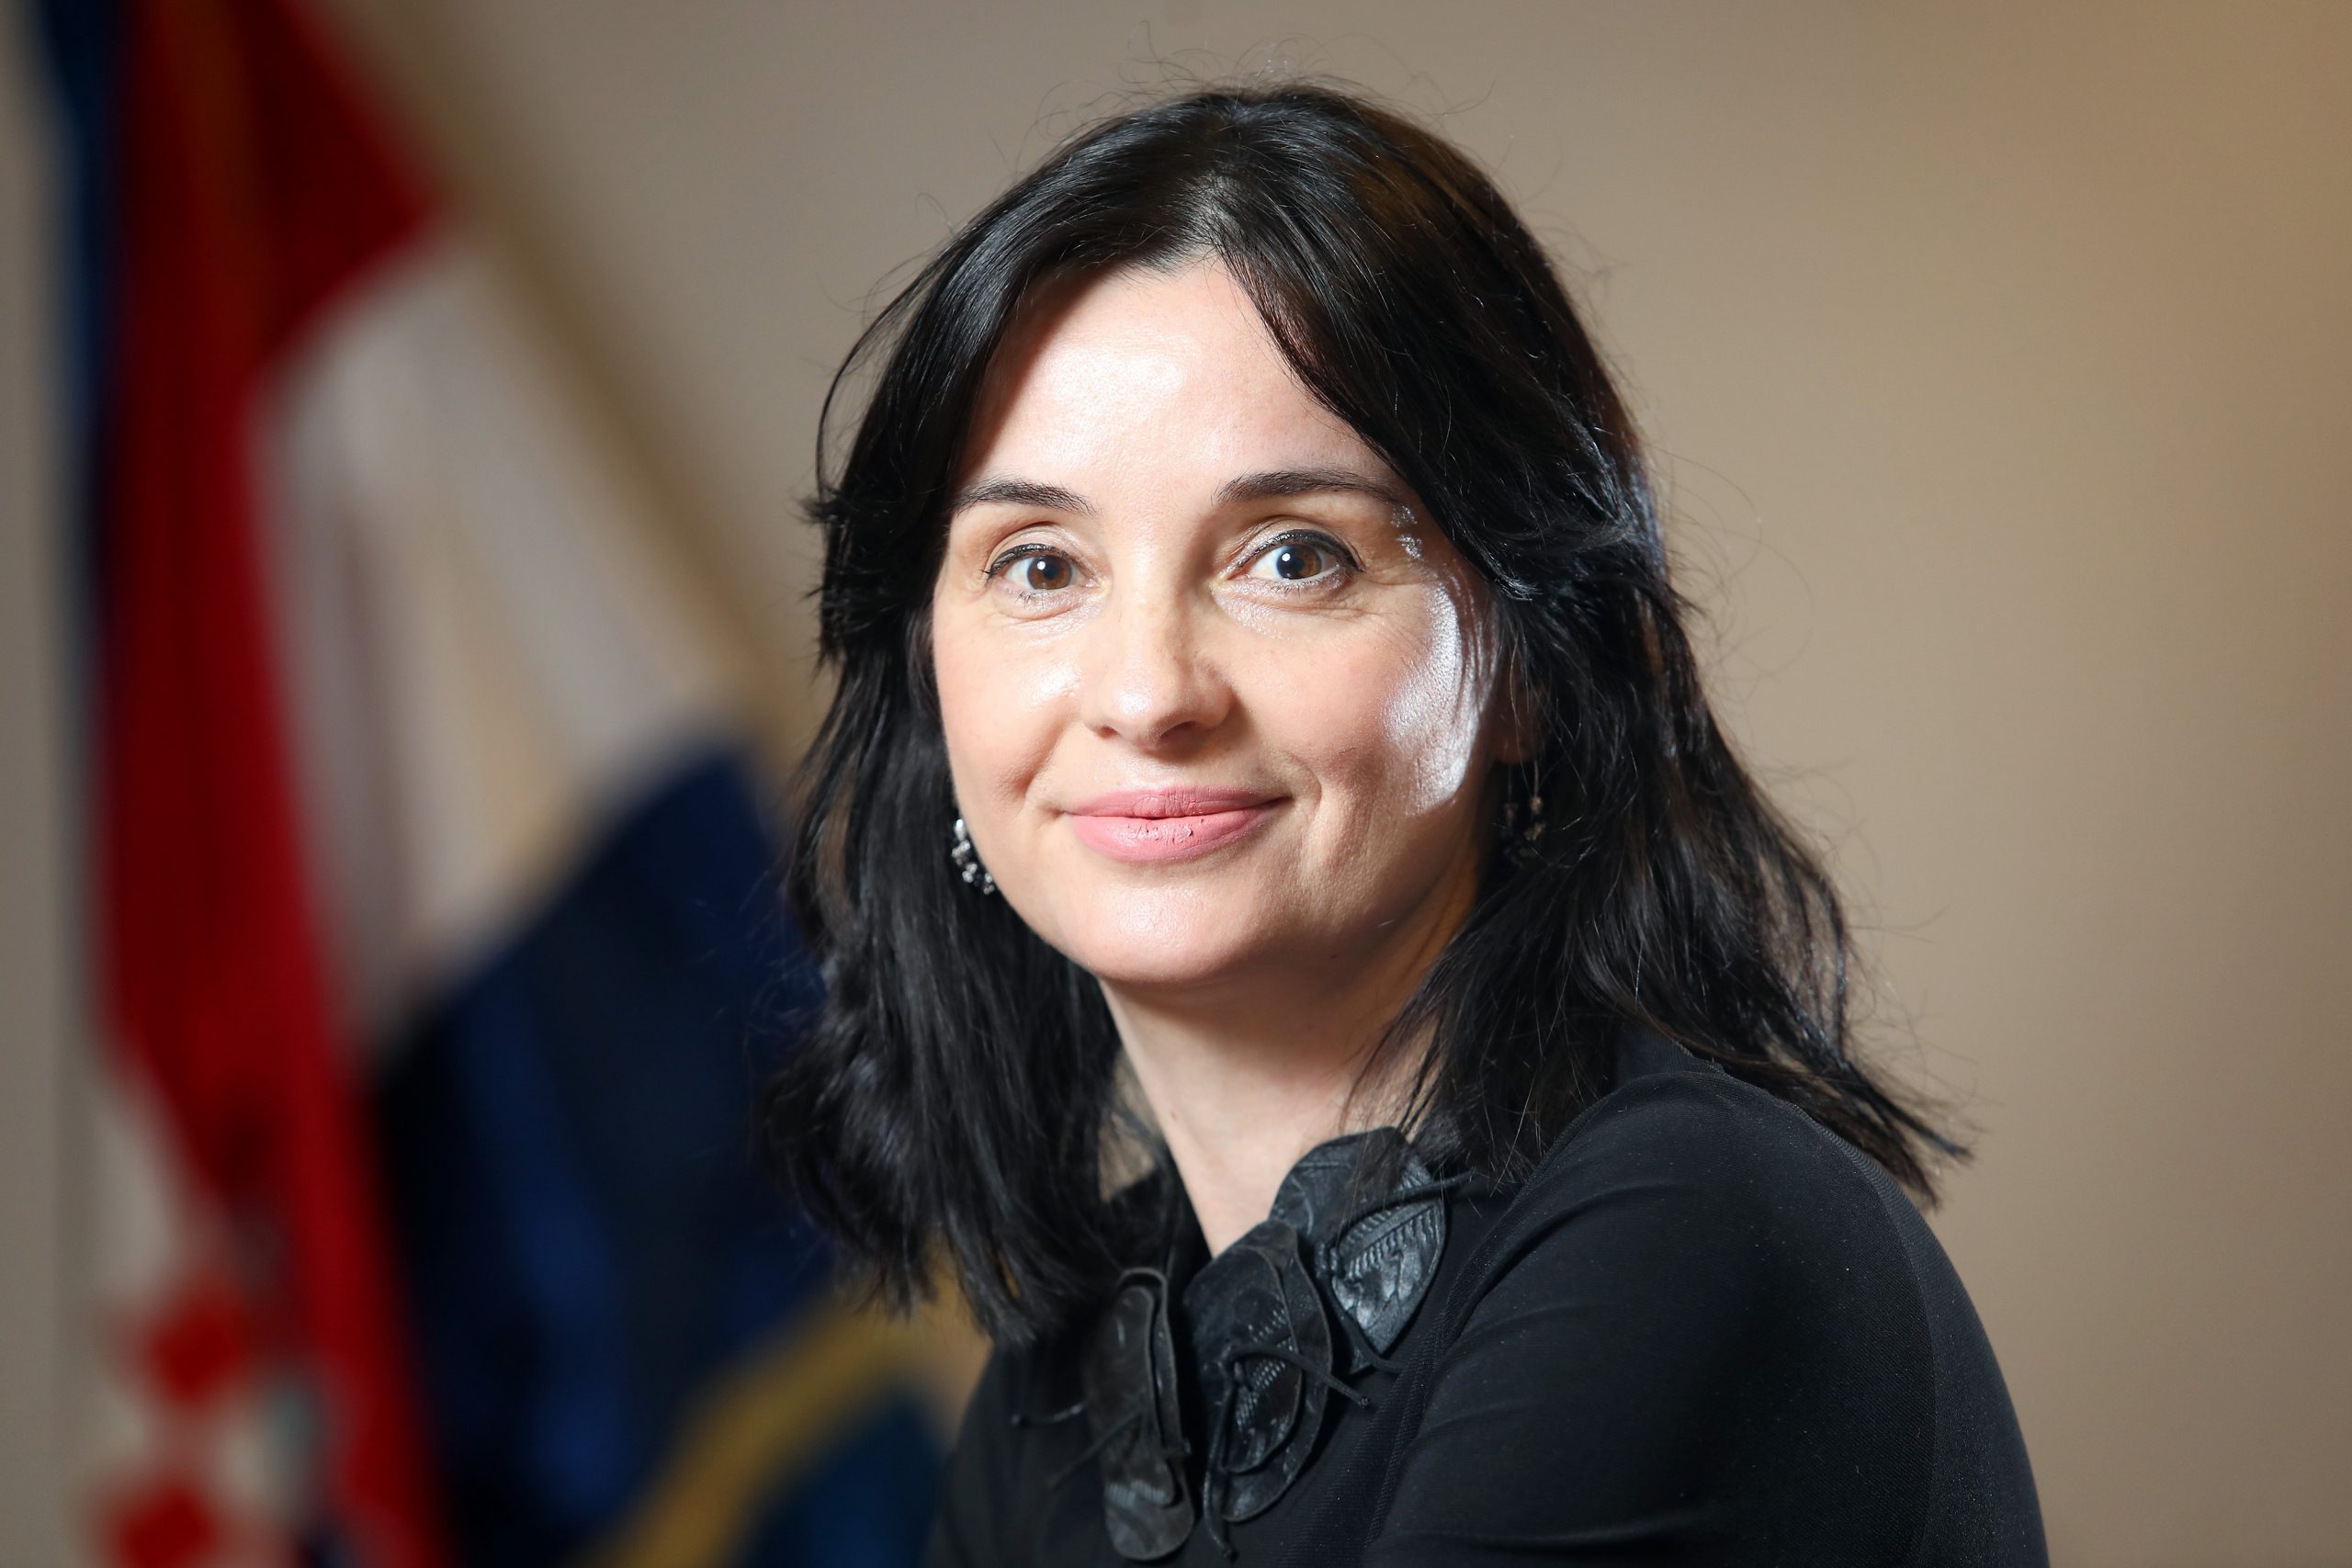 23.12.2020.Zagreb-Marija Vuckovic, ministrica poljoprivrede.
Photo: Boris Scitar/Vecernji list/PIXSELL